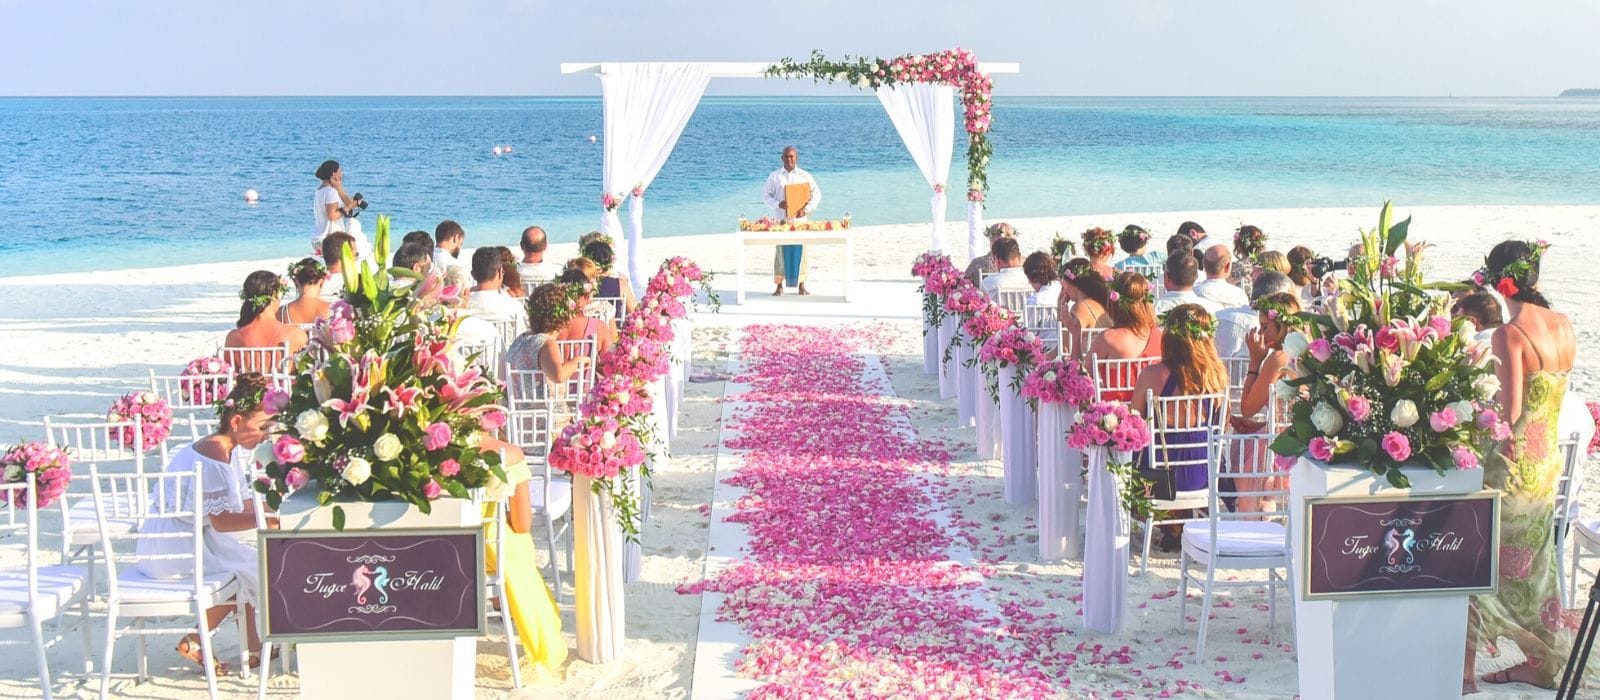 Destination Wedding Favors: 35 Ideas to Surprise Your Guests - Forever Wedding  Favors